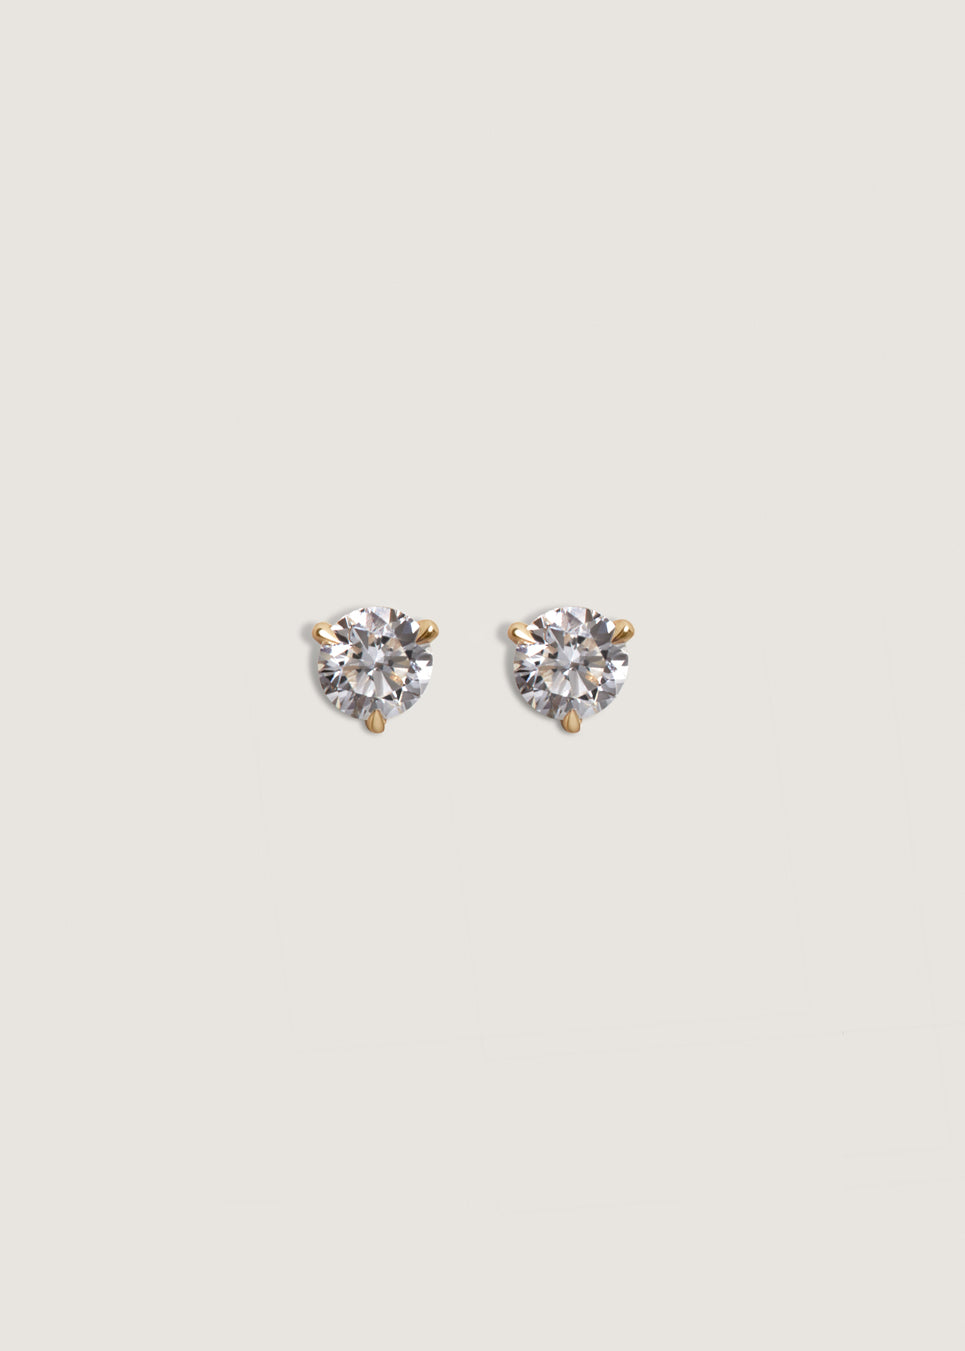 alt="June Round Diamond Stud Earrings 0.5ctw"